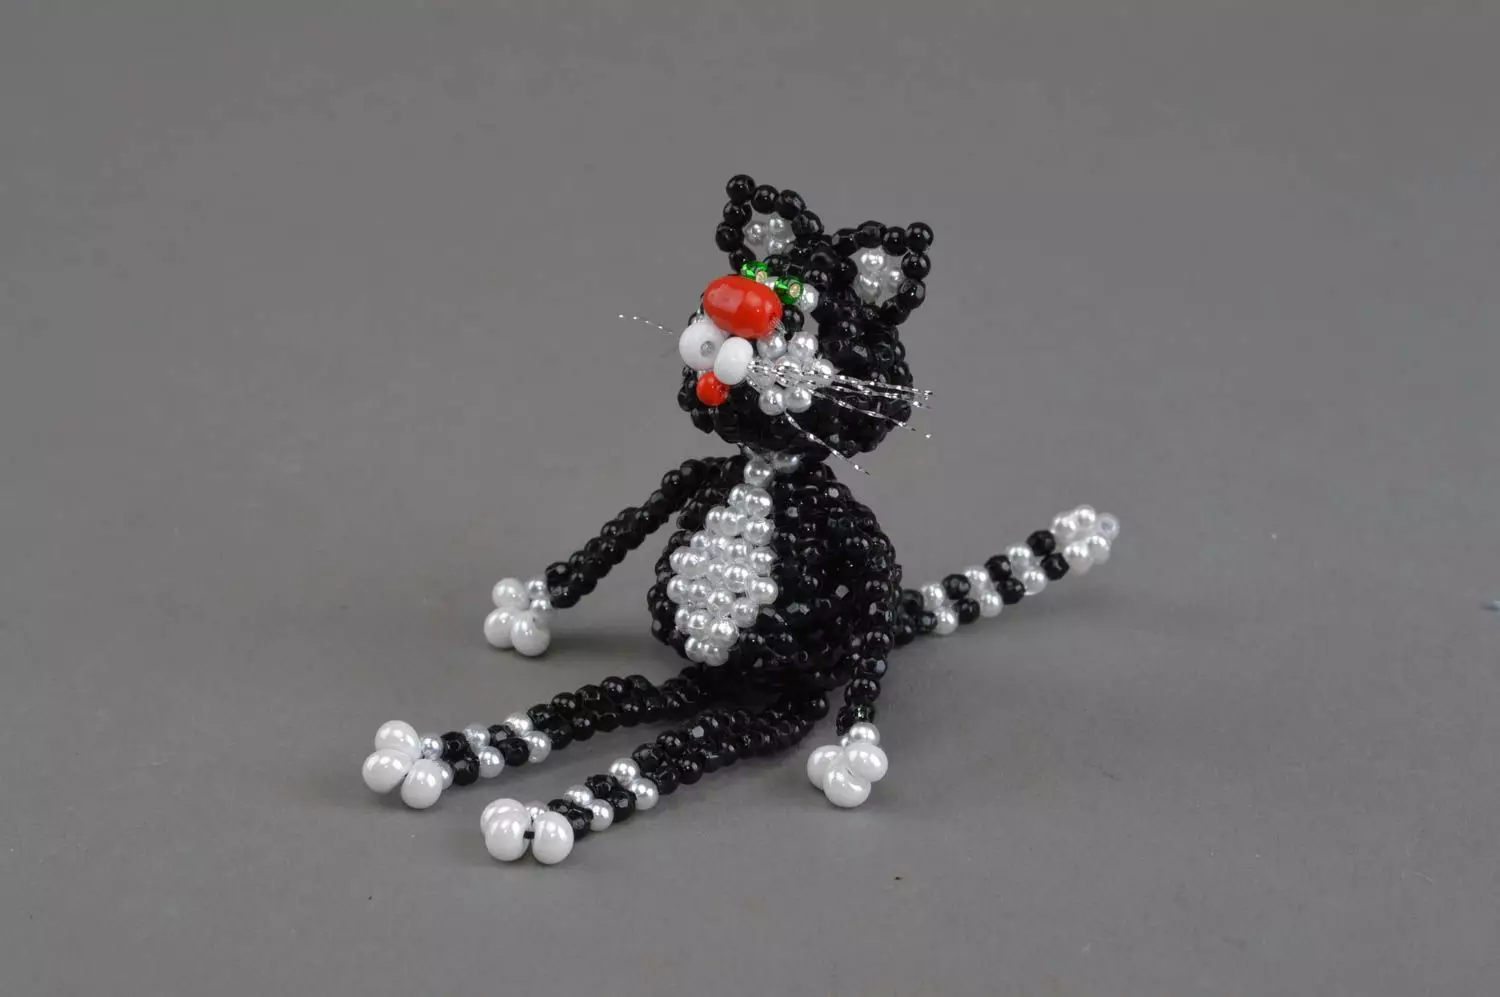 eminding ຂອງພາຍໃນໄດ້: figurine homemade ຂອງ cat ສີແດງຈາກລູກປັດ [ລິນ]